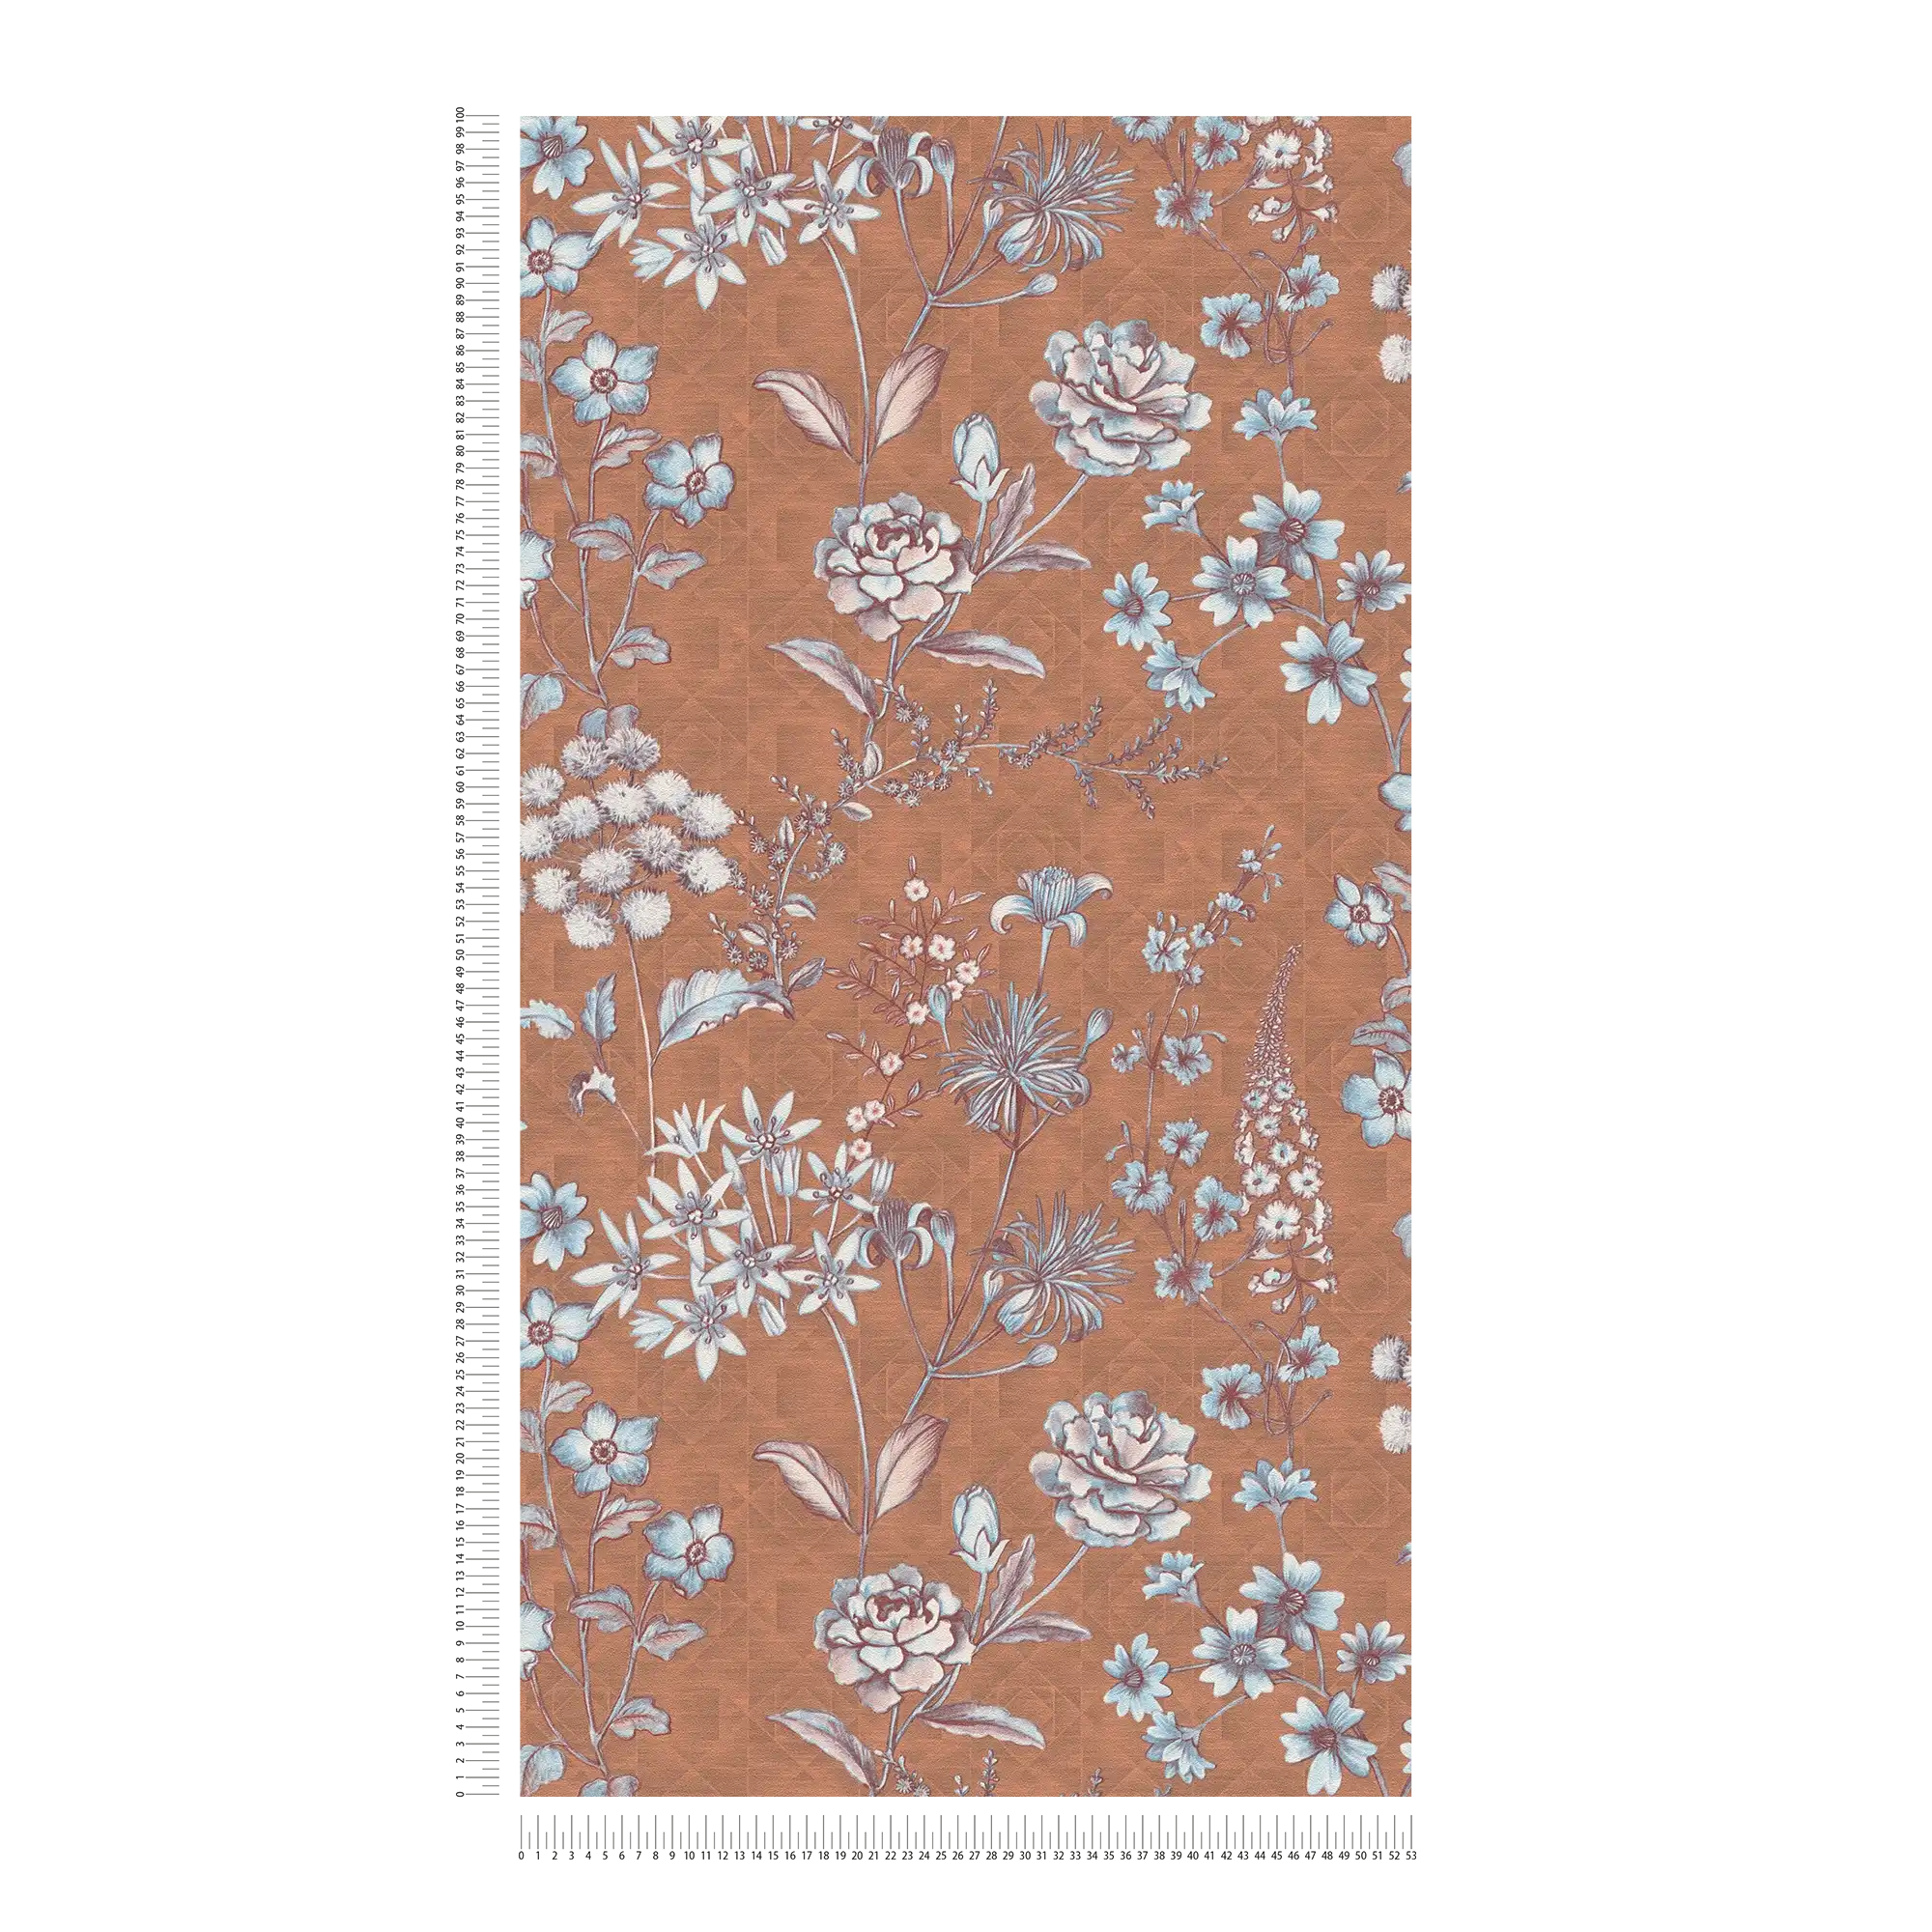             Vintage Blumentapete mit floralem Muster – Orange, Braun, Hellblau
        